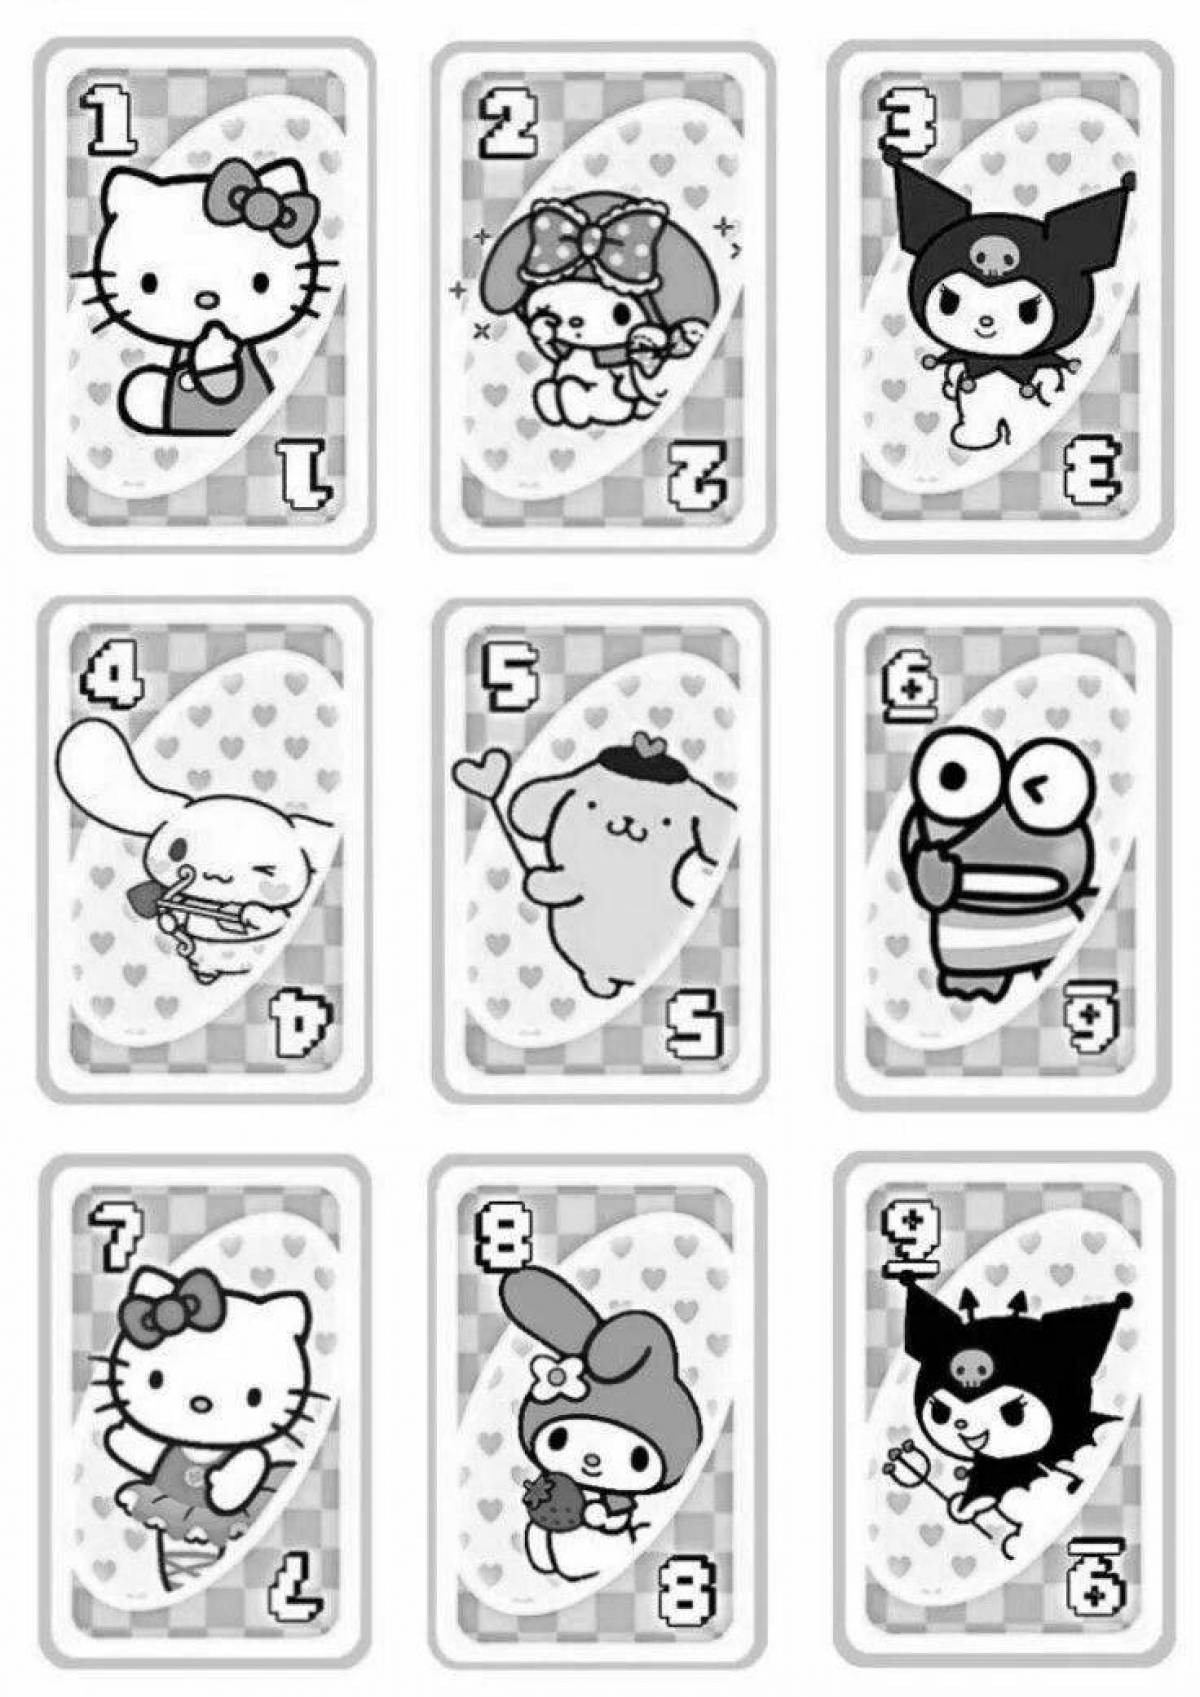 Uno hello kitty card #11